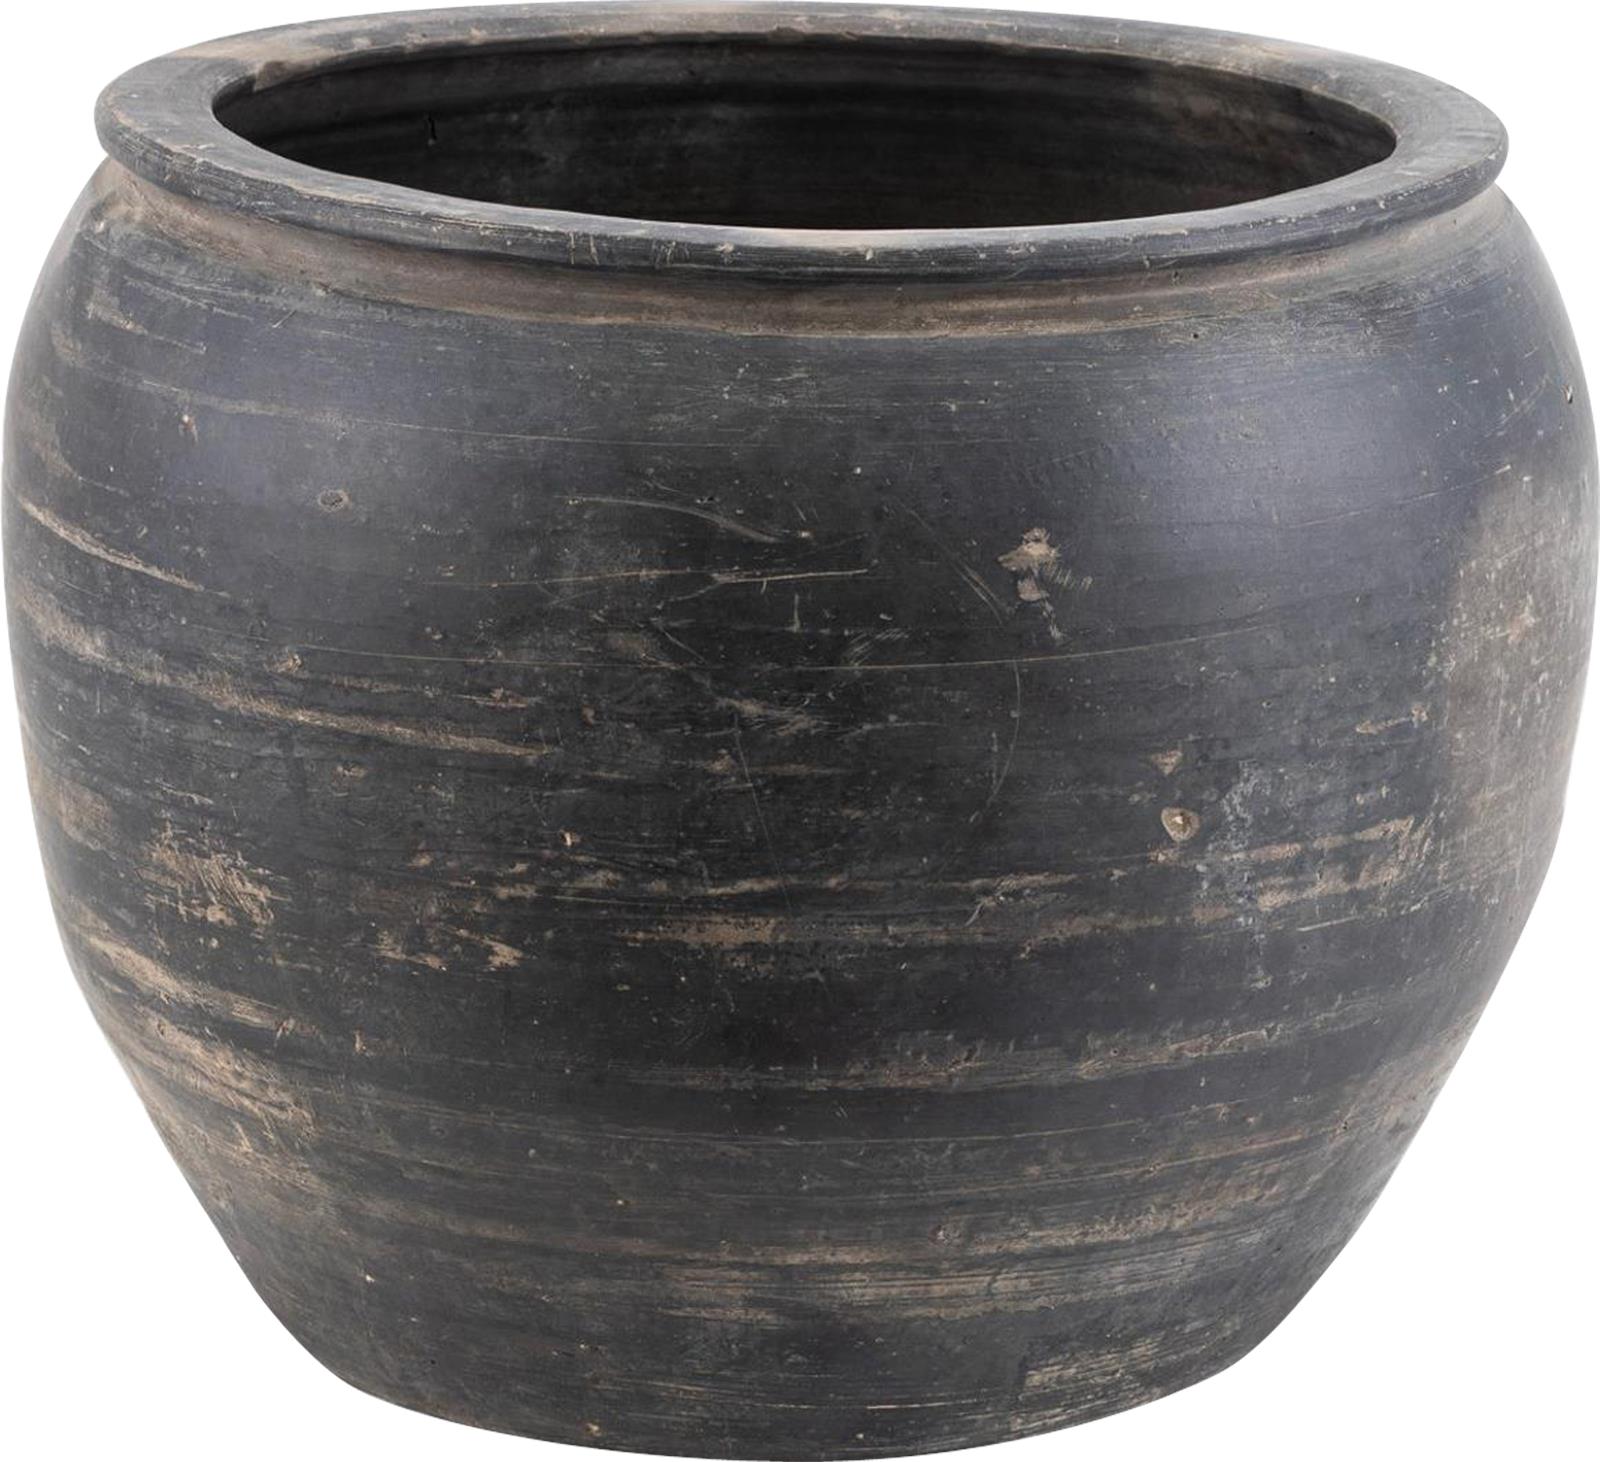 Water Jar Vase Vintage Large Gray Pottery Ceramic Handmade Hand-Cra-Image 2